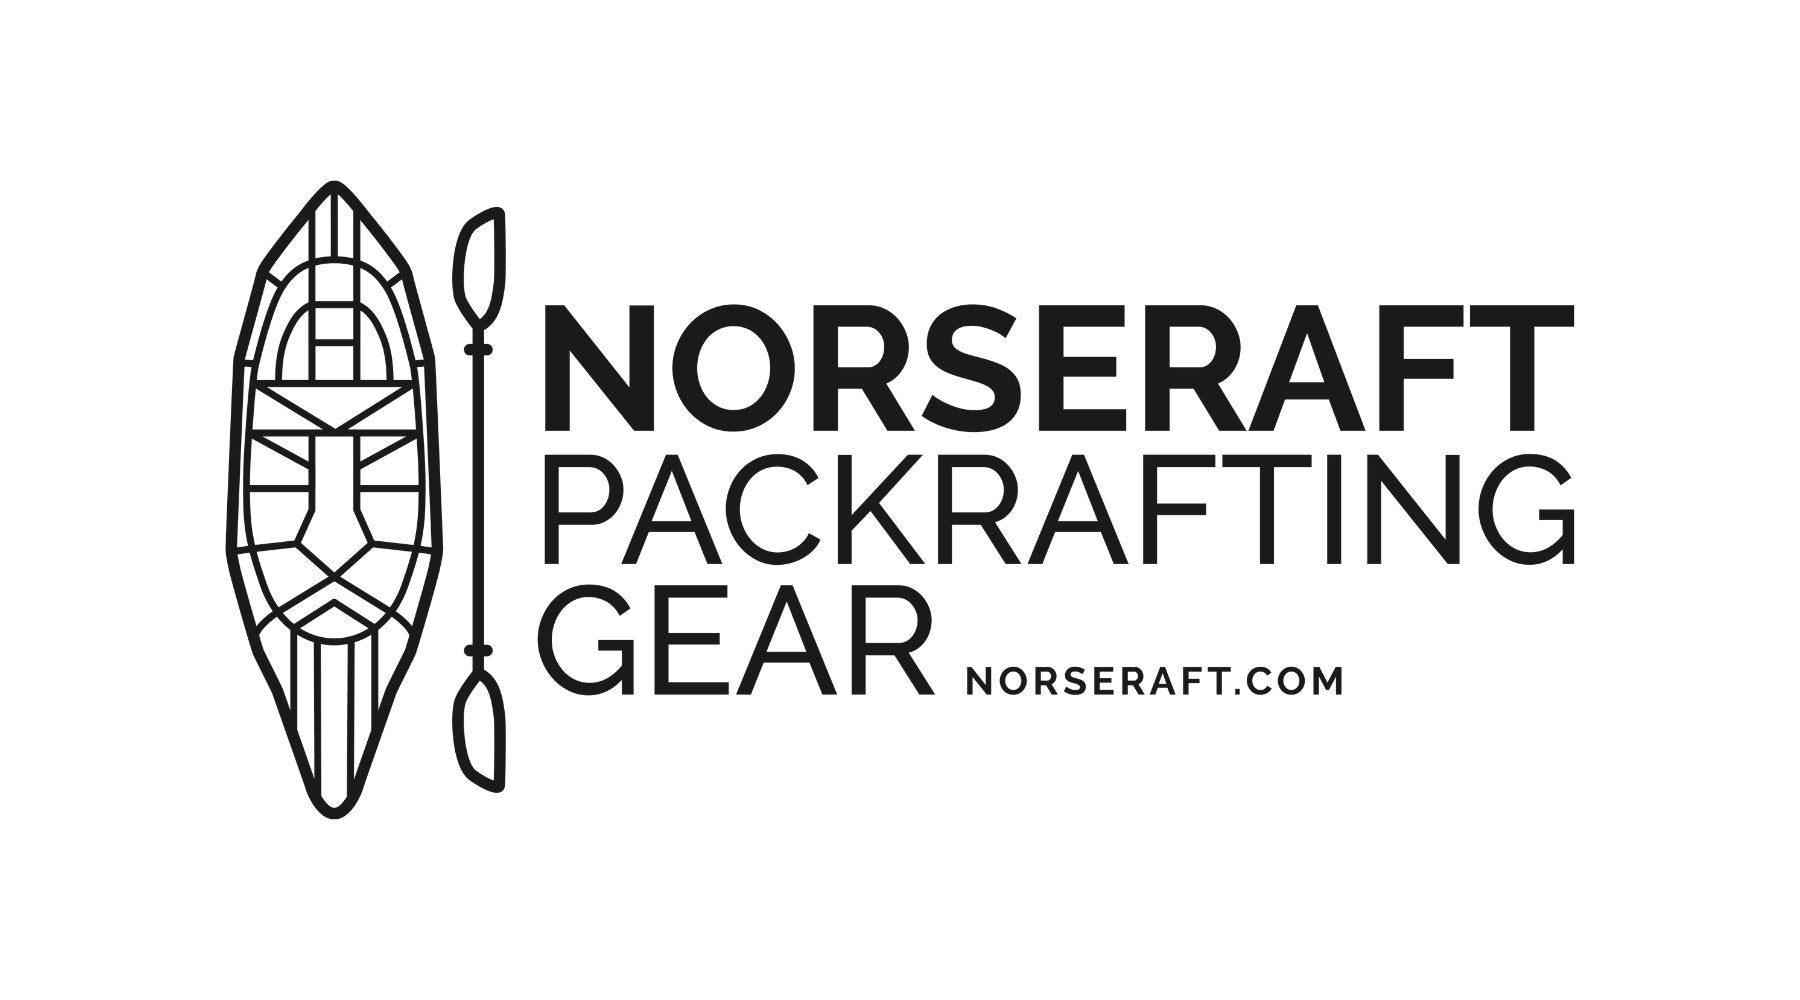 Norseraft Packrafting Gear